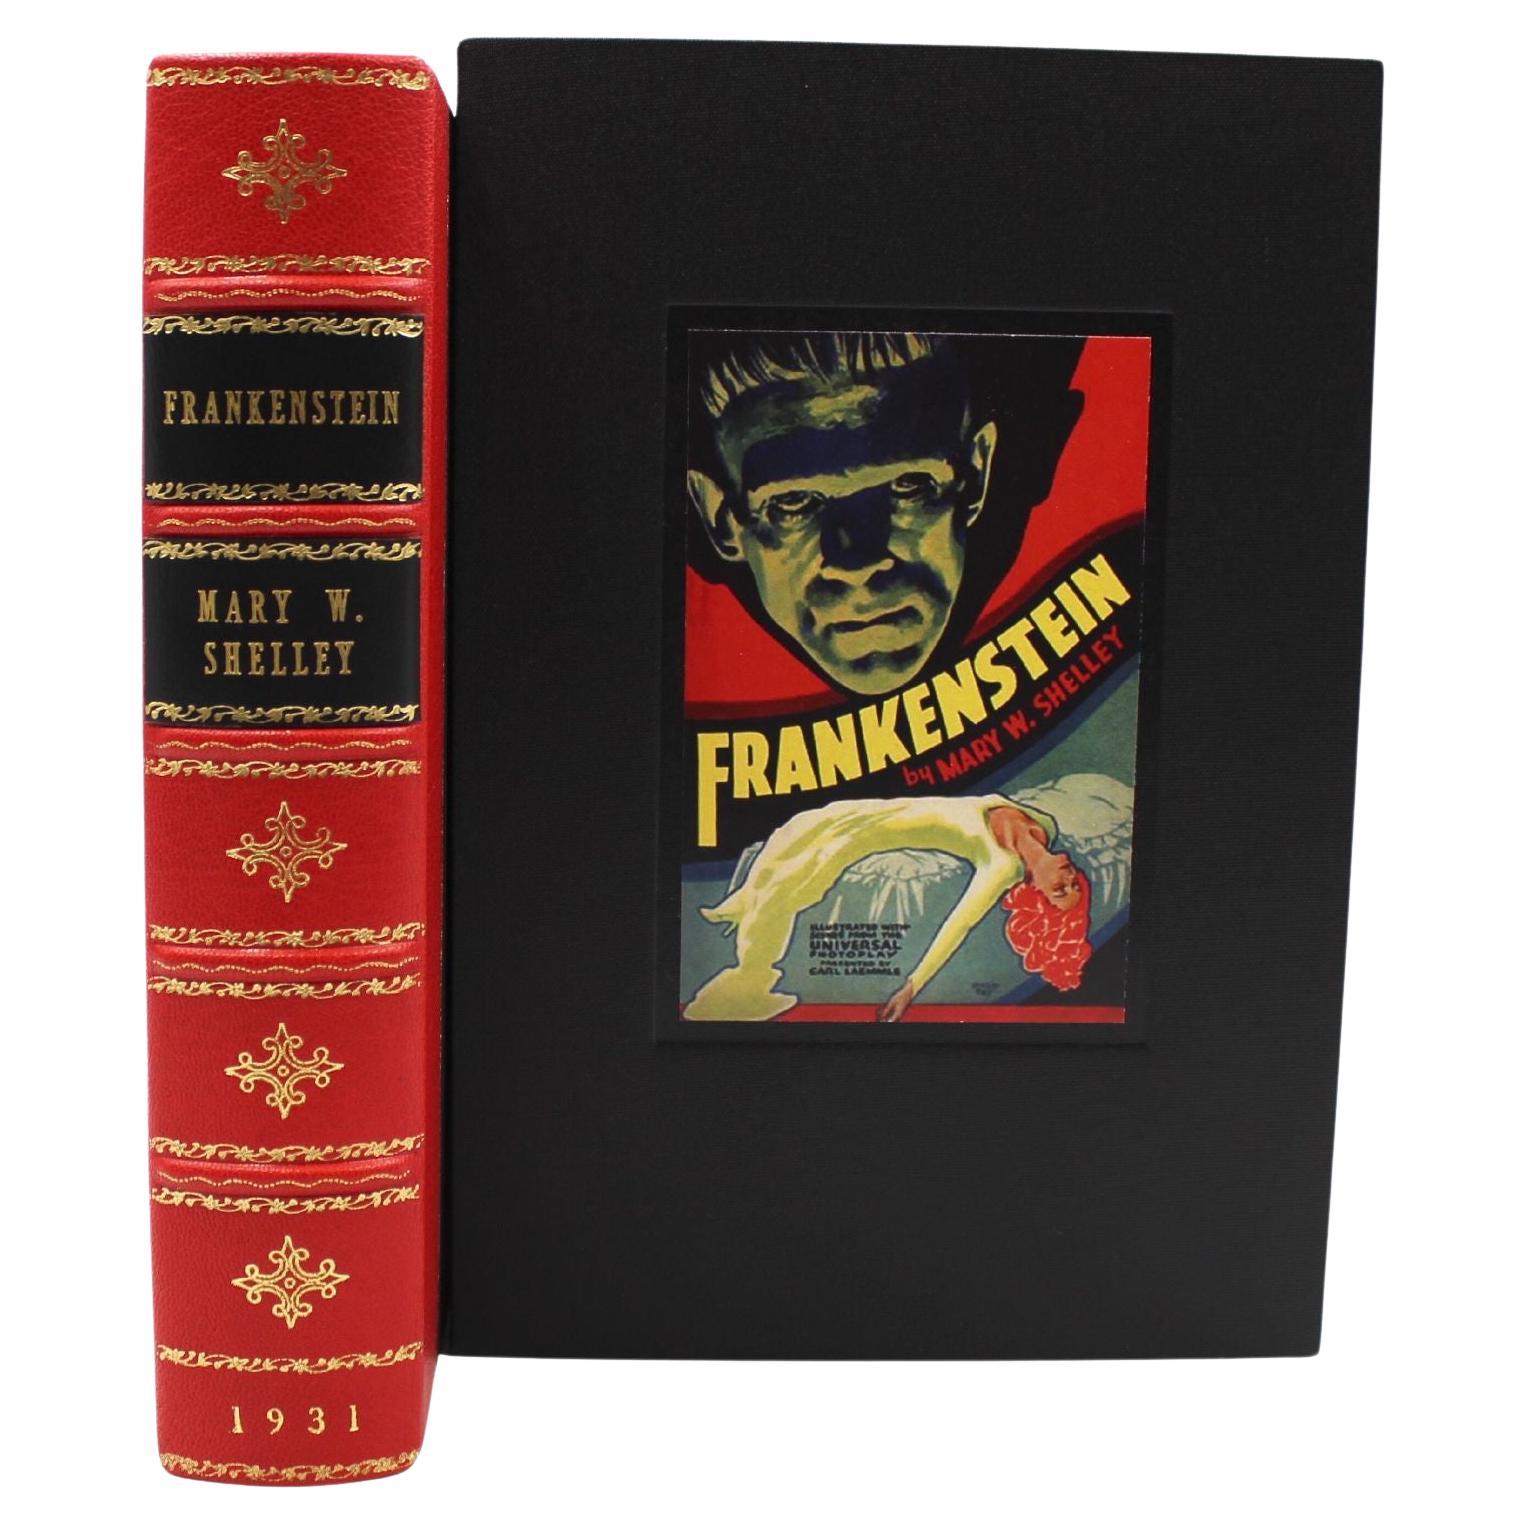 Frankenstein par Mary W. Shelley, Photoplay Grosset & Dunlap Edition, 1931